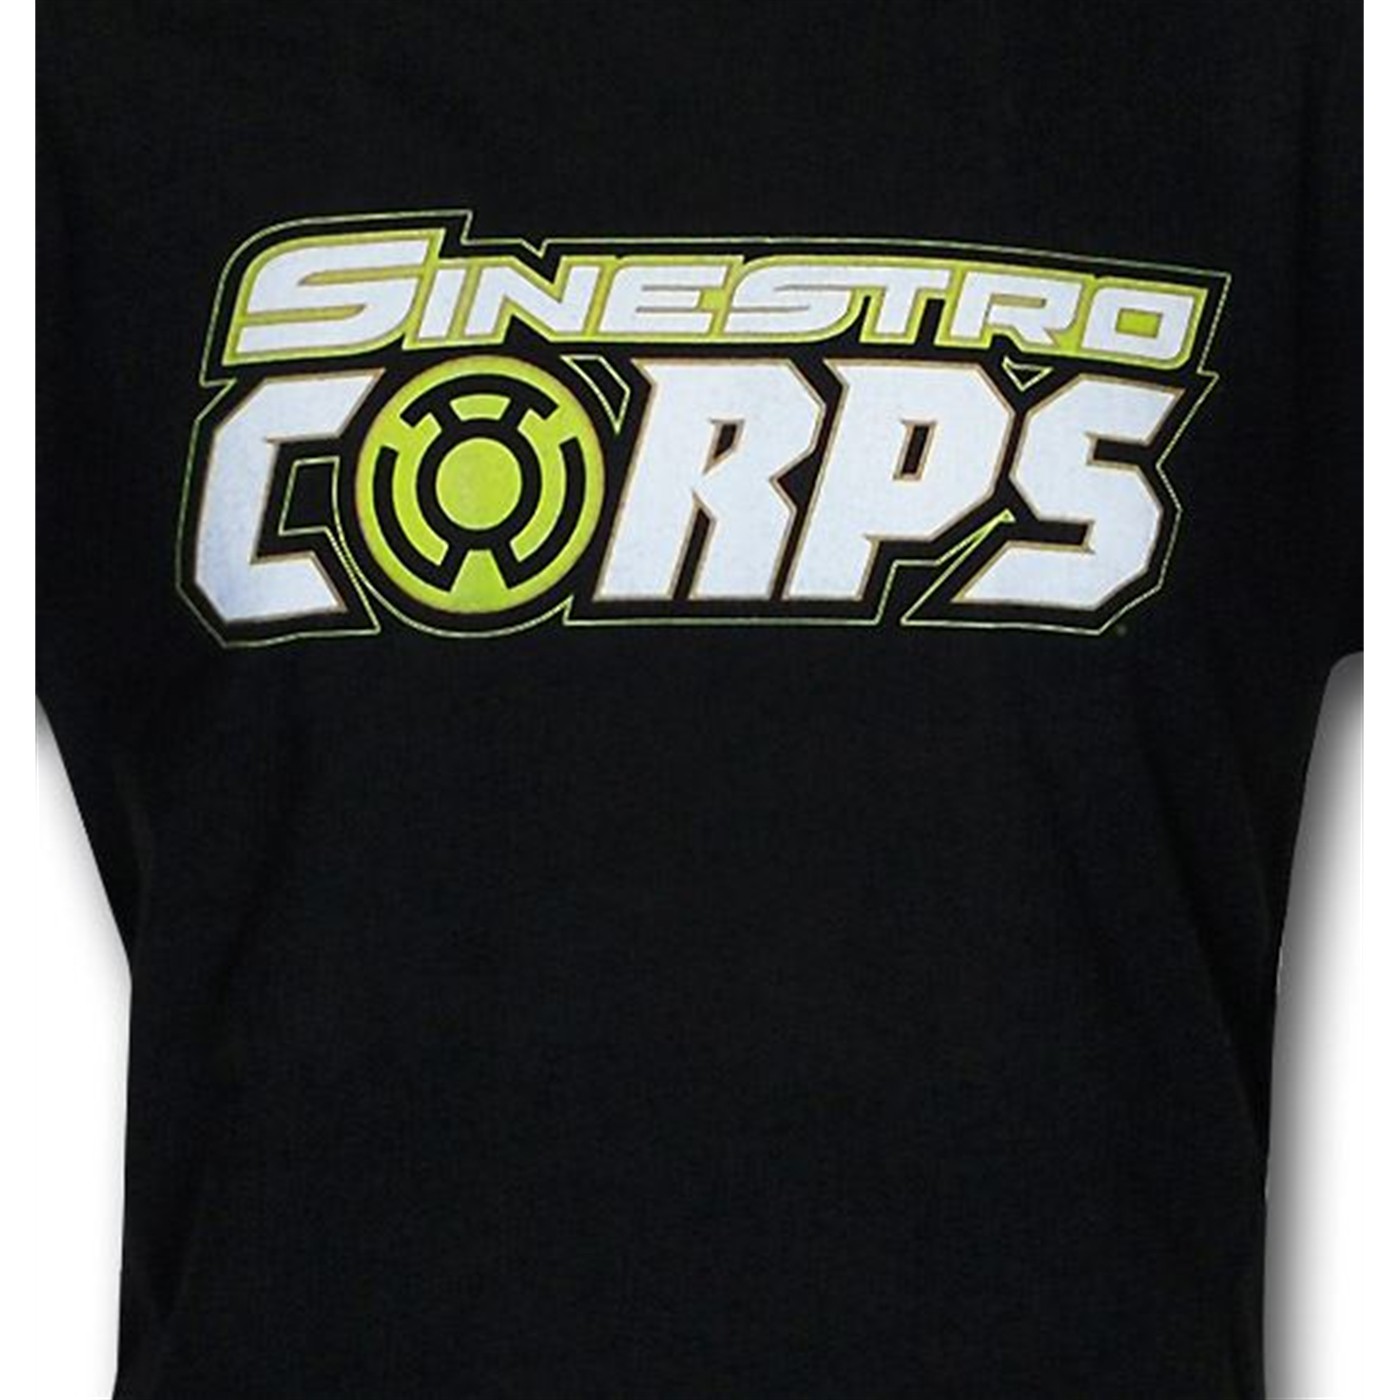 Sinestro Corps Bad Guy T-Shirt